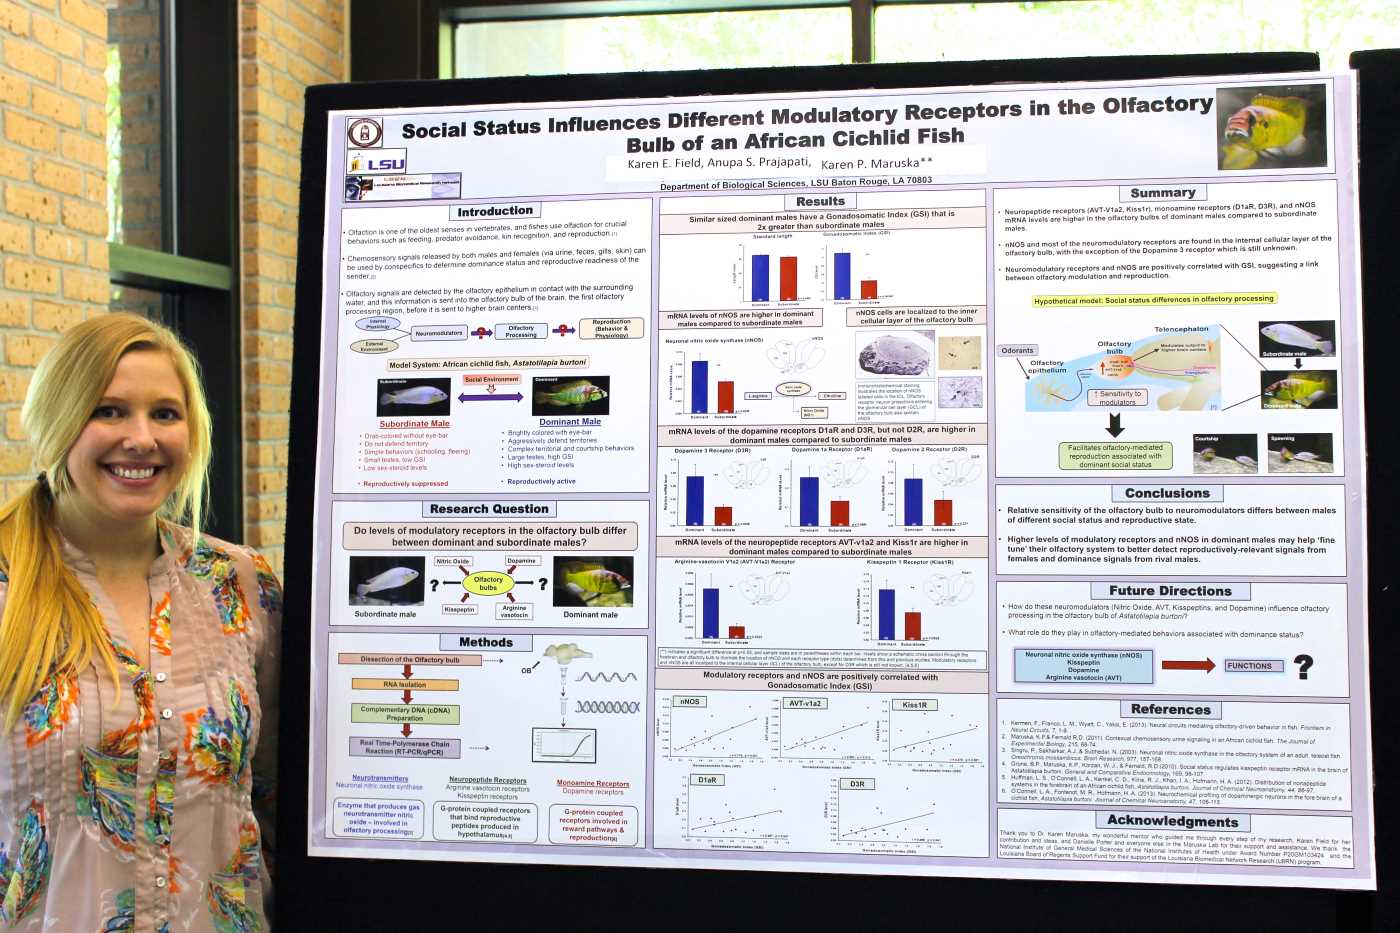 Karen Field presents her research at the BioGrads Symposium